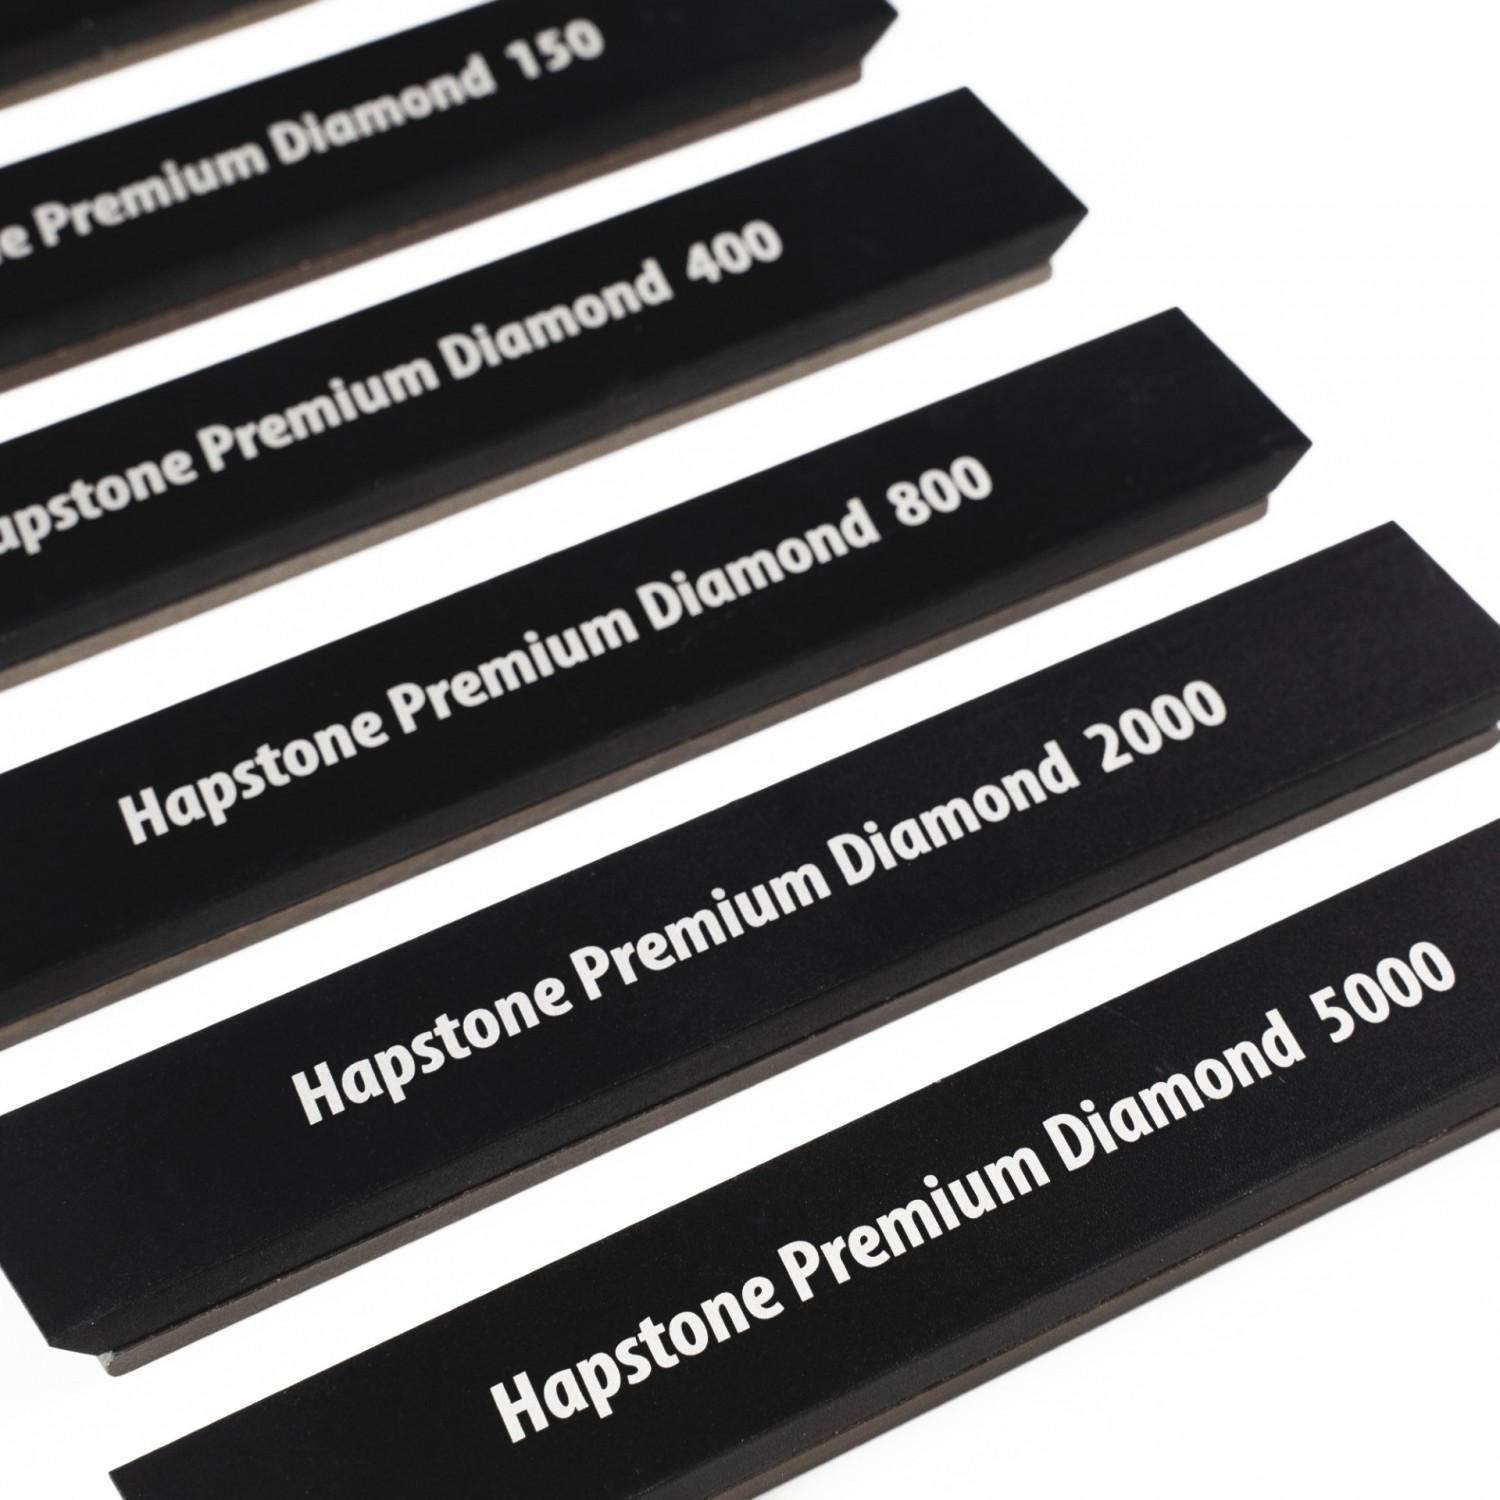 Hapstone Premium Diamond